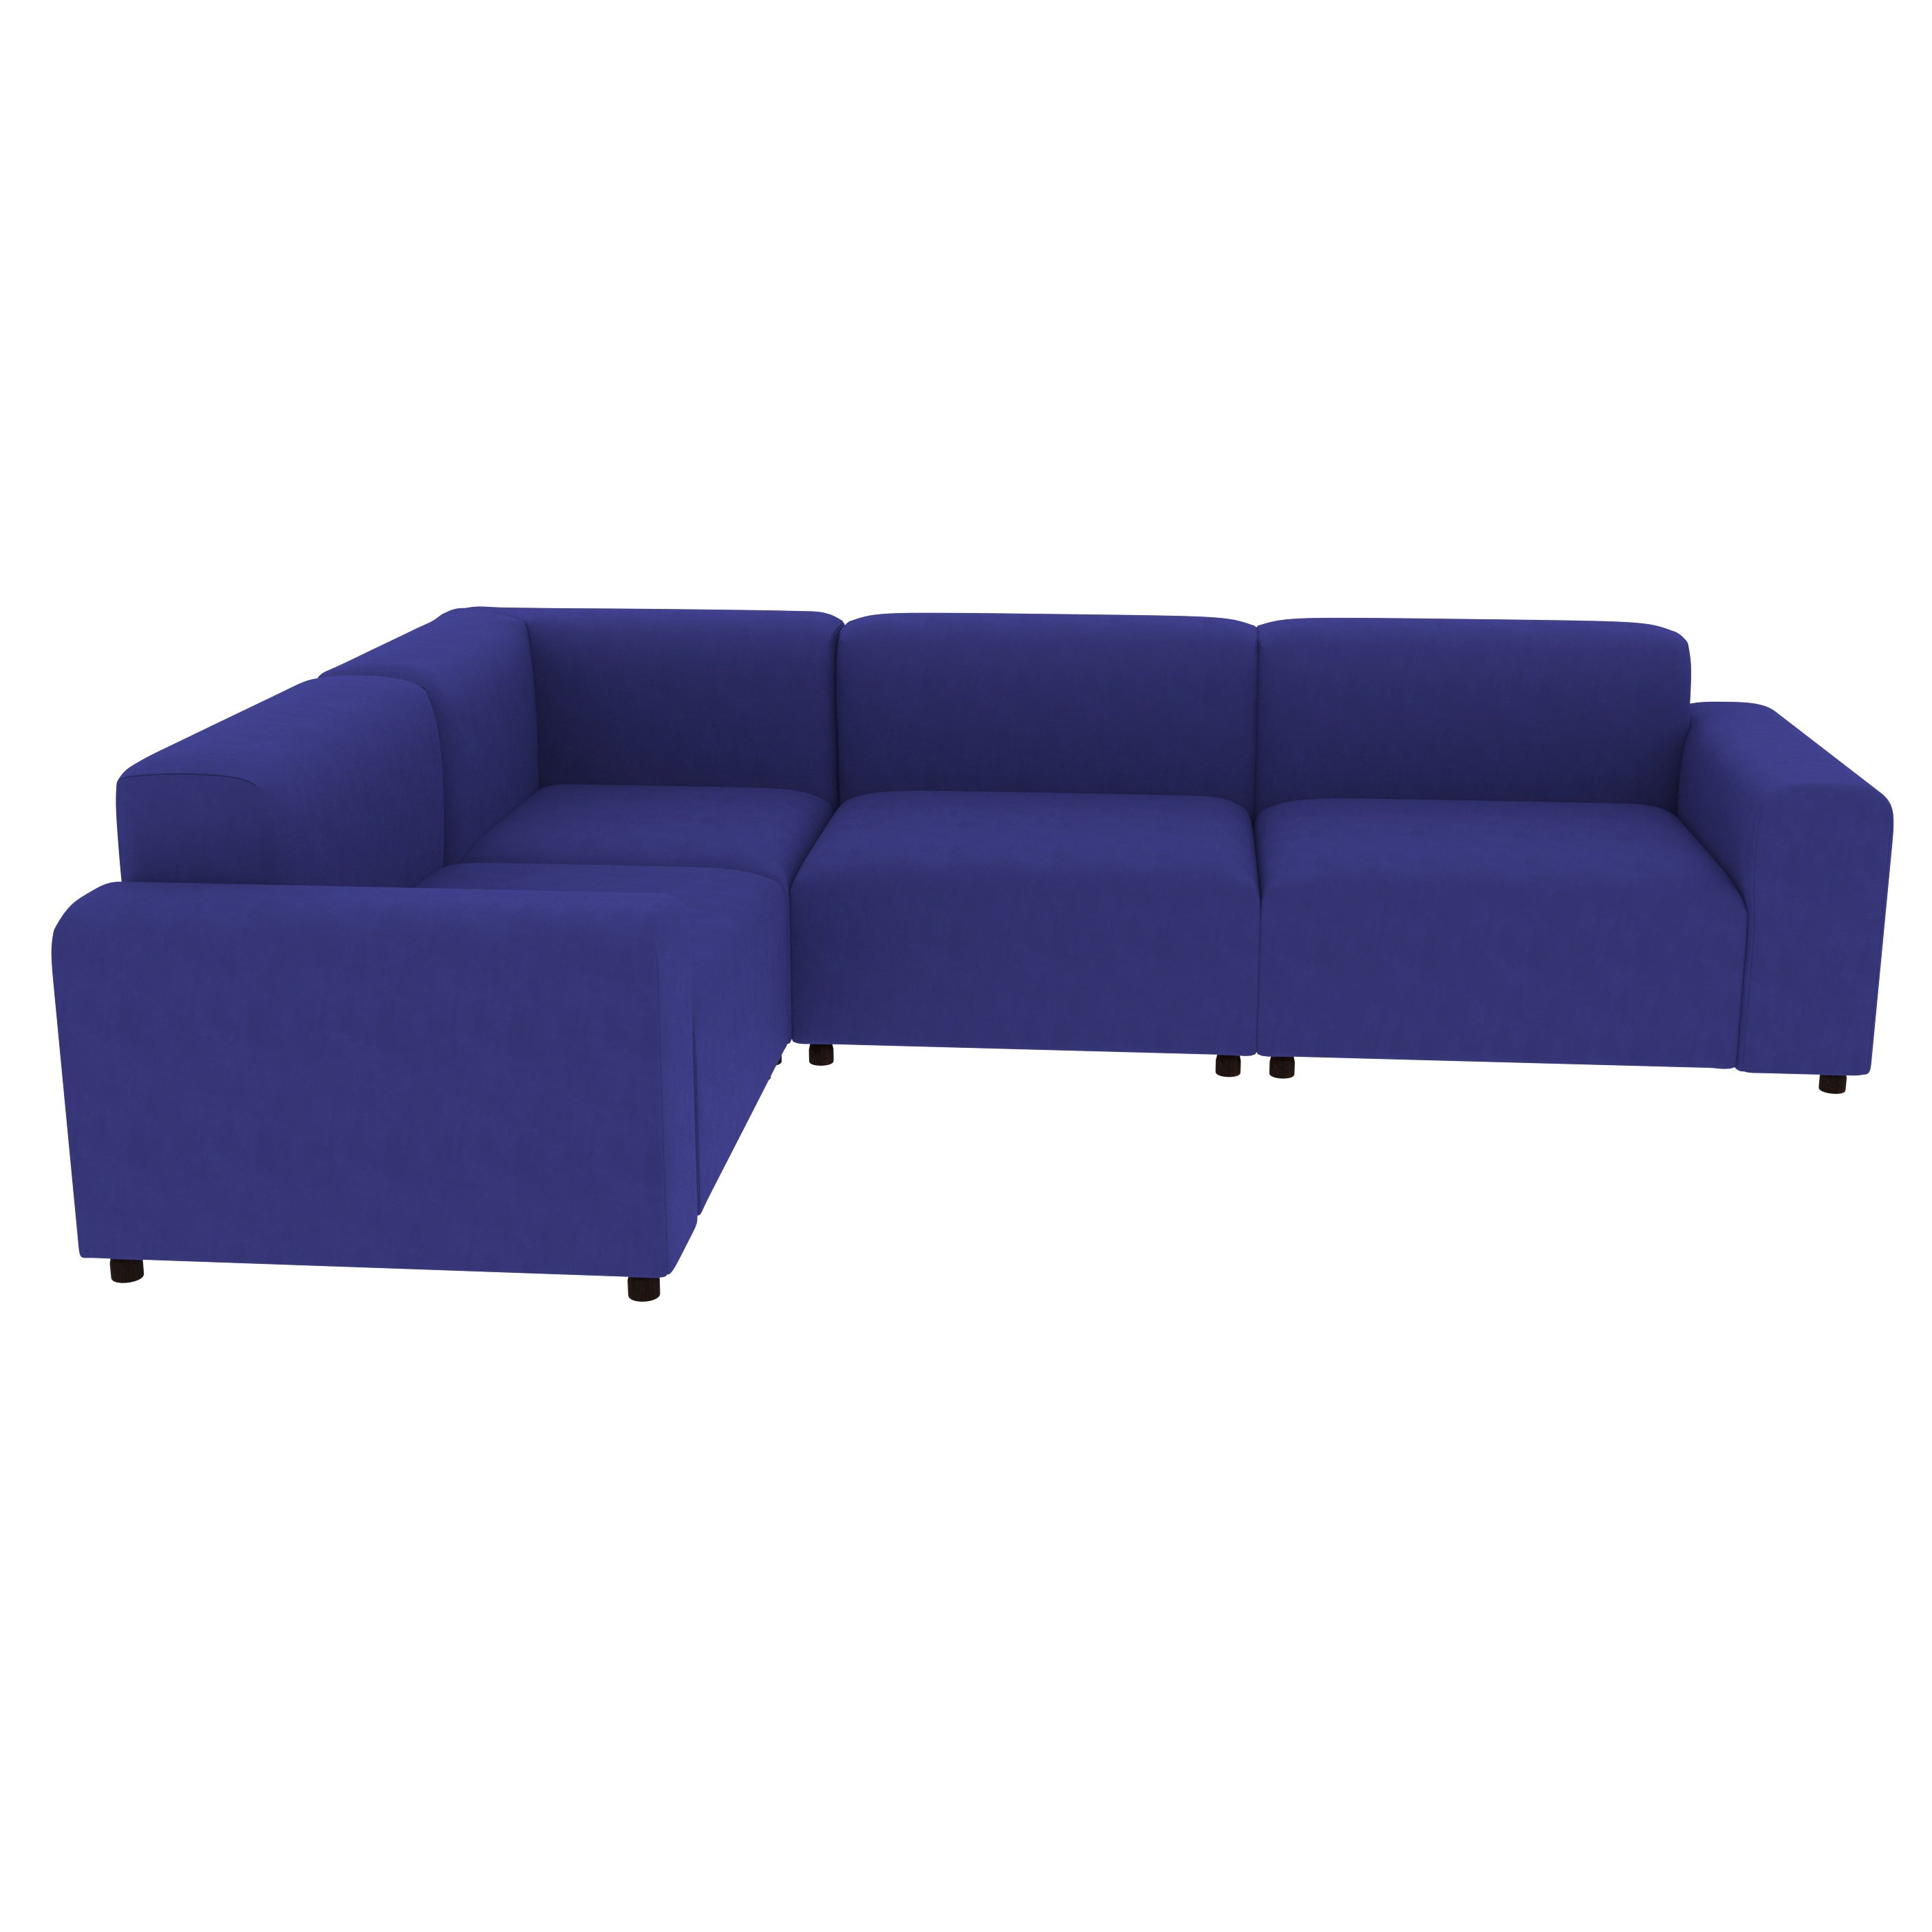 Premium Royal Blue Pastel Coloured Comfort Long L Shaped 4 Seater Sofa for Home Sofa